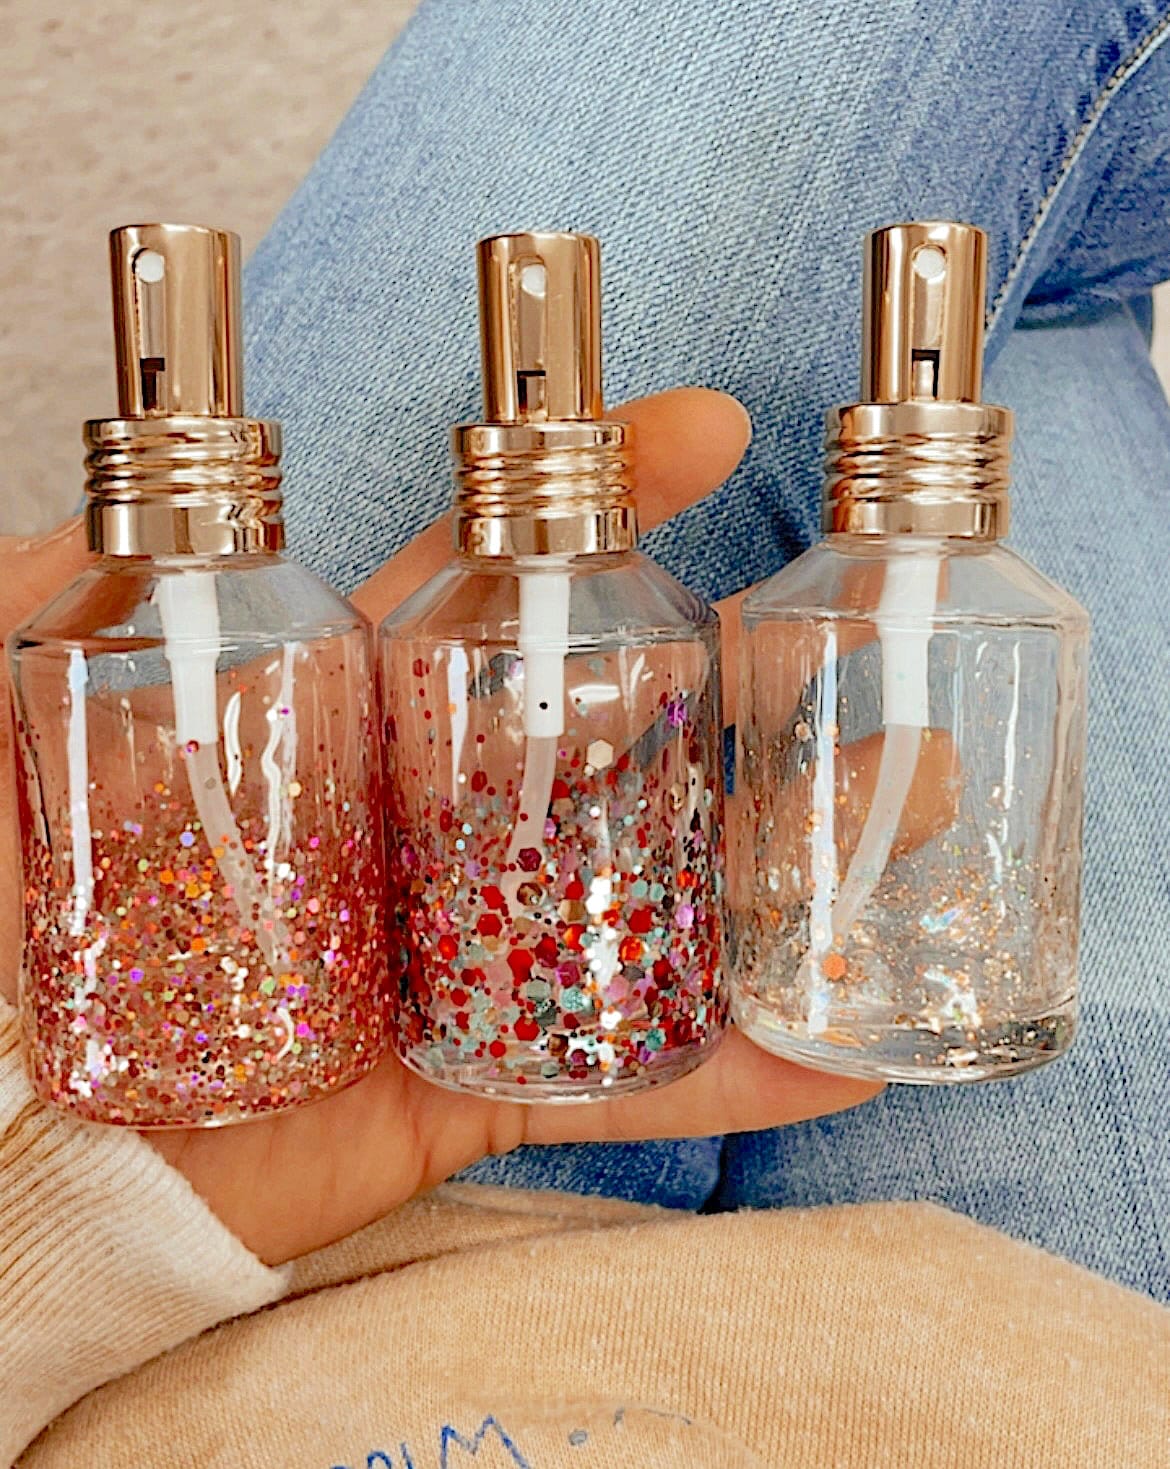 Small Spray Bottles Edible Glitter